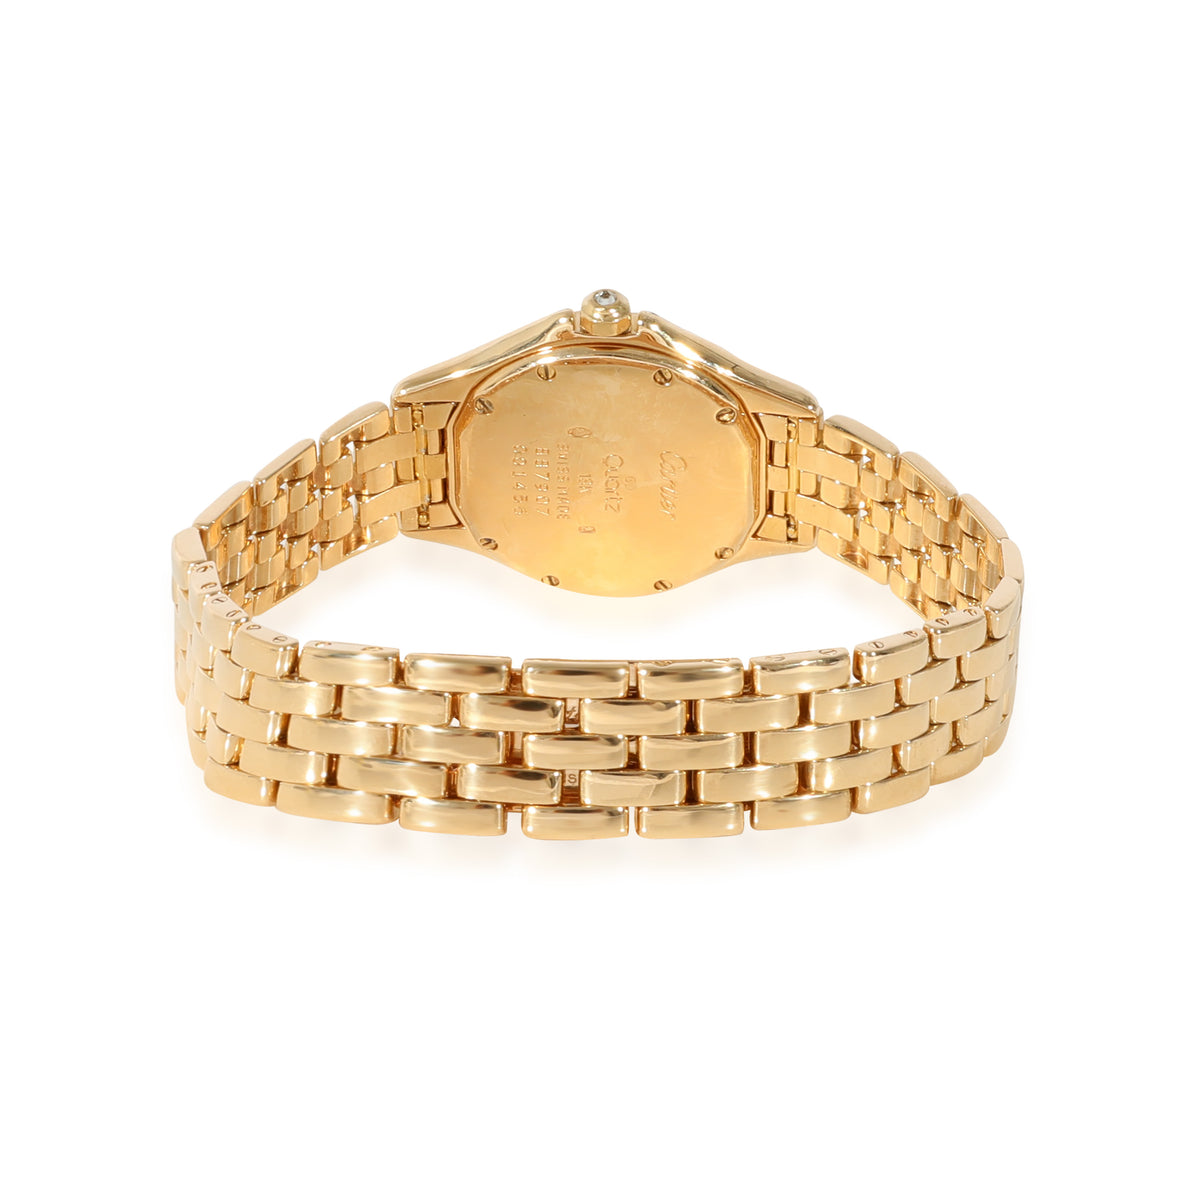 Cartier Cougar 887907 Women's Watch in 18kt Yellow Gold